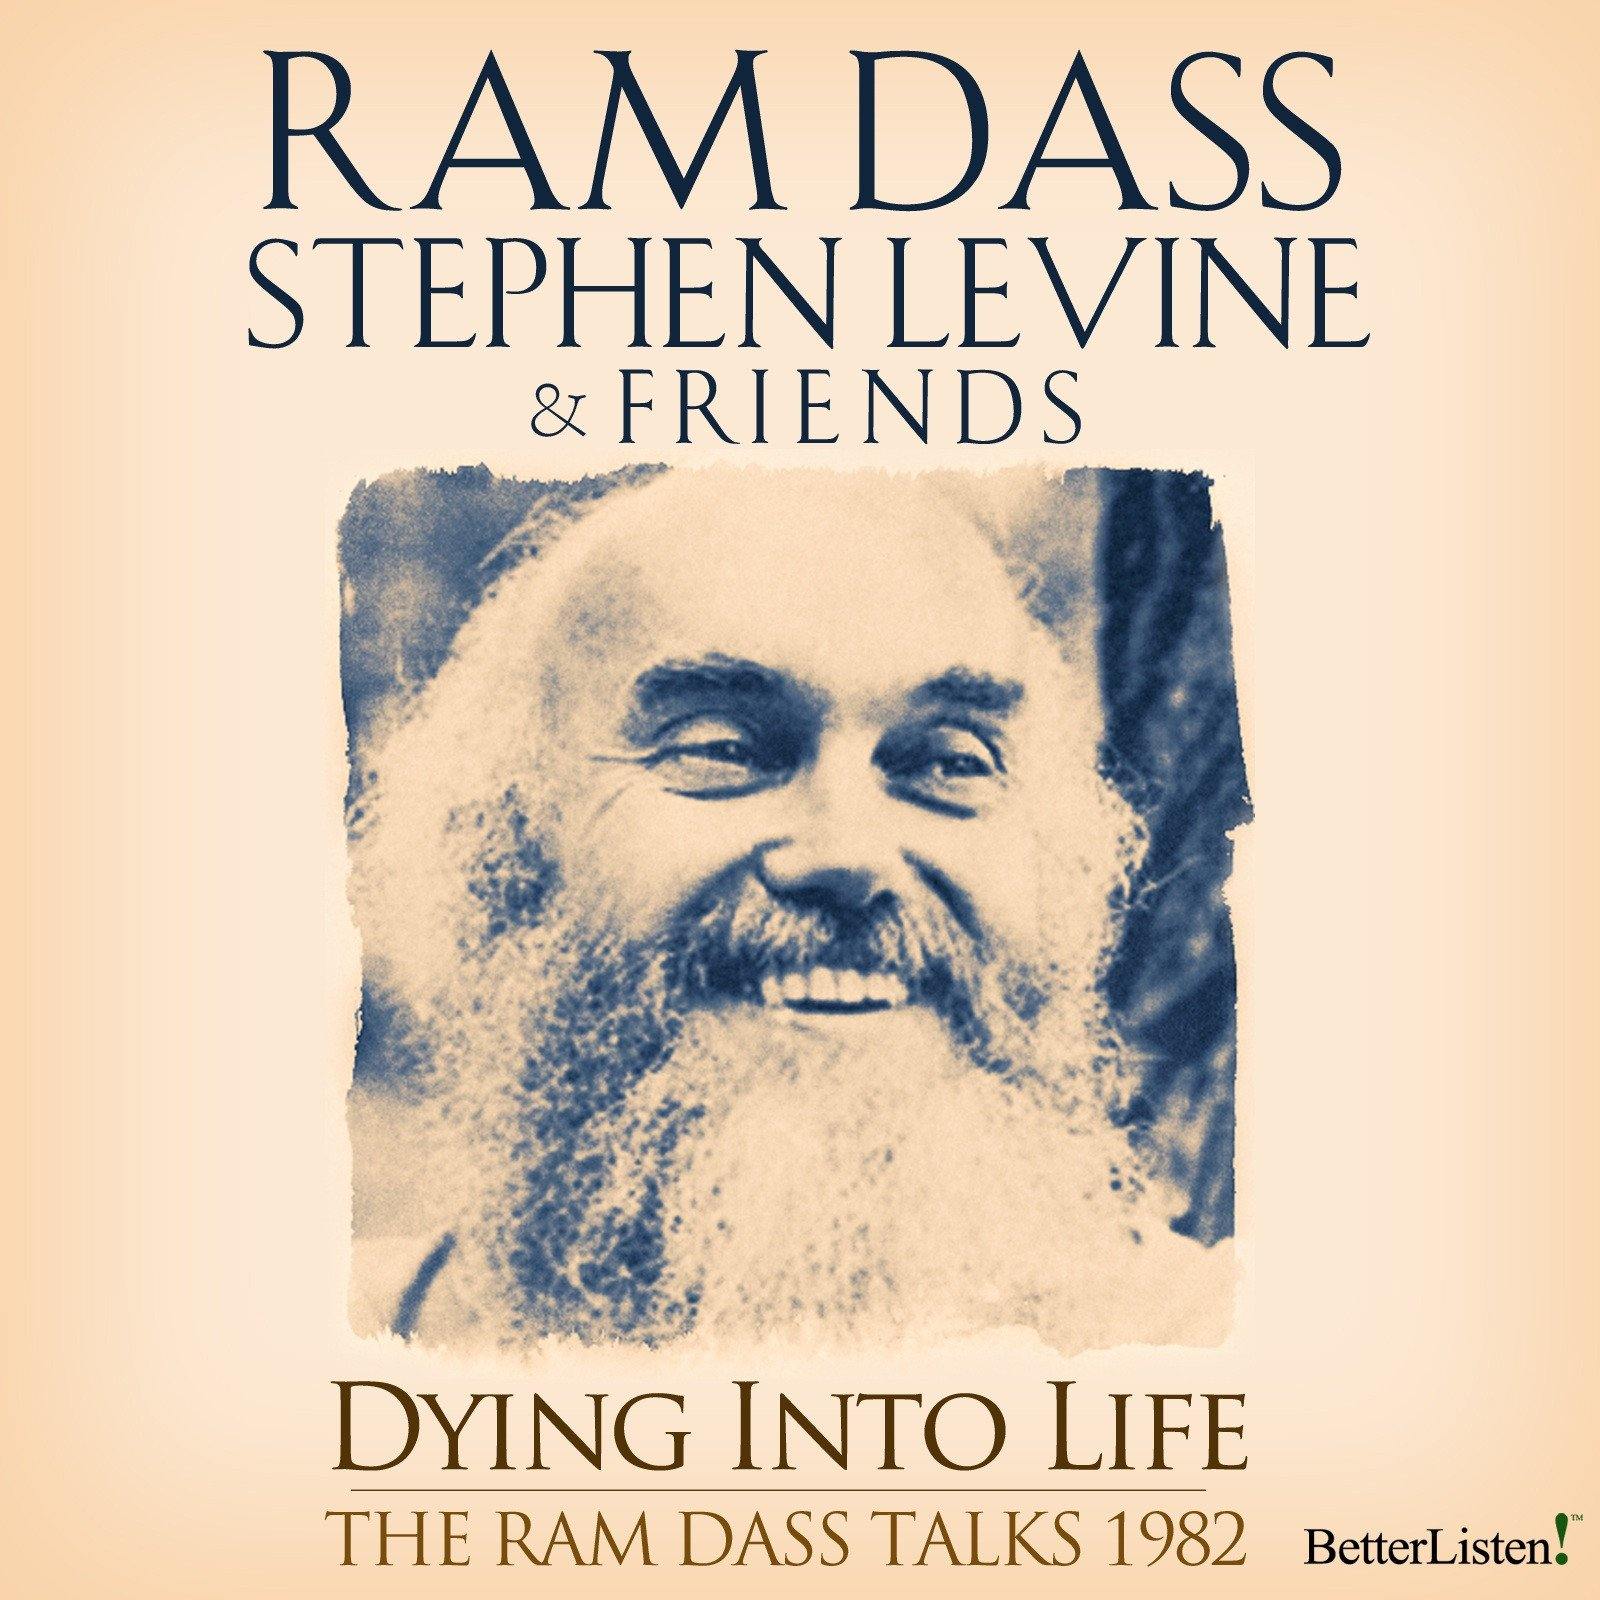 Dying Into Life Complete Set of Talks with Ram Dass, Stephen Levine and Friends Audio Program BetterListen! - BetterListen!